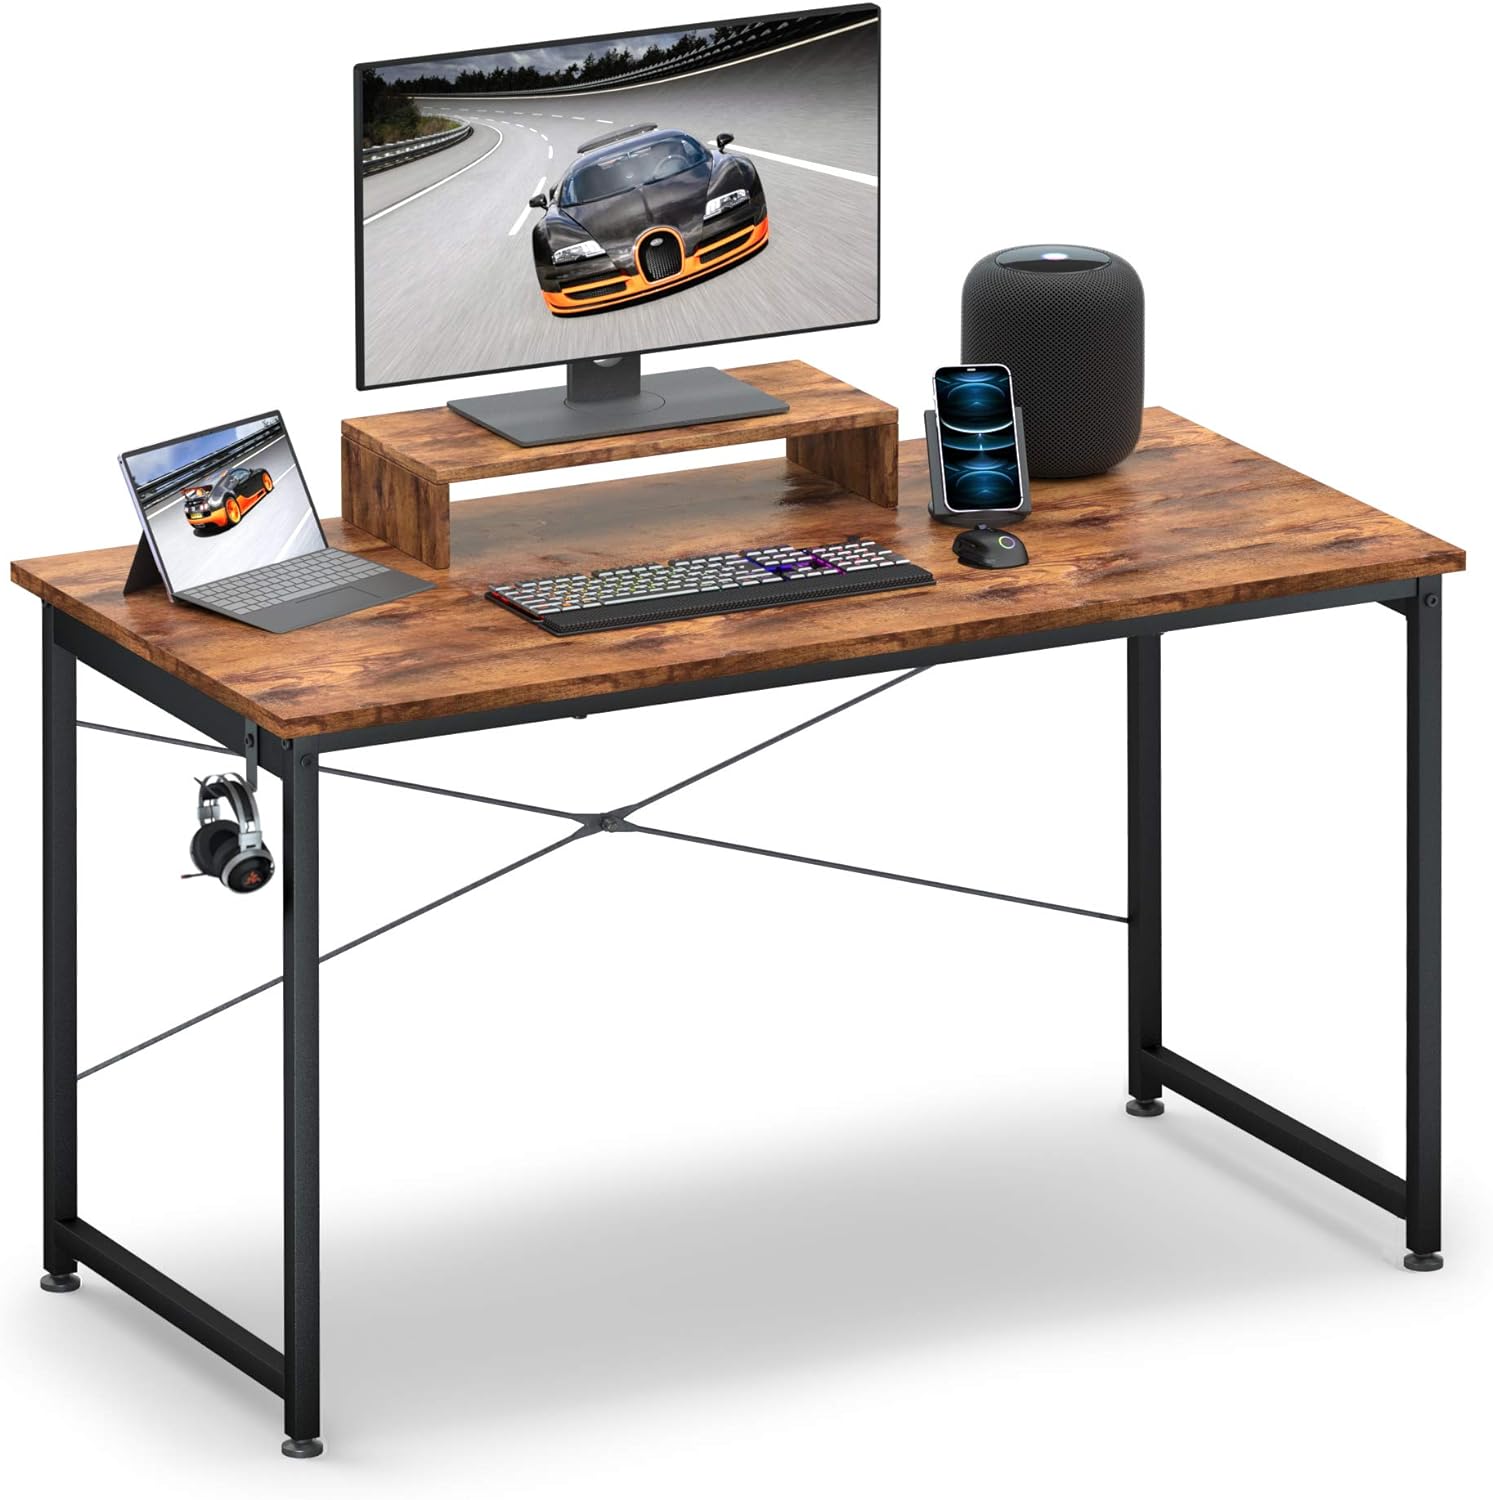 OTK Computer Desk 47" with Movable Monitor Shelf Riser, Sturdy Home Office Desk, Writing Desk, Gaming Desk with Headphone Hook, Computer Work Station, Work Table, Vintage